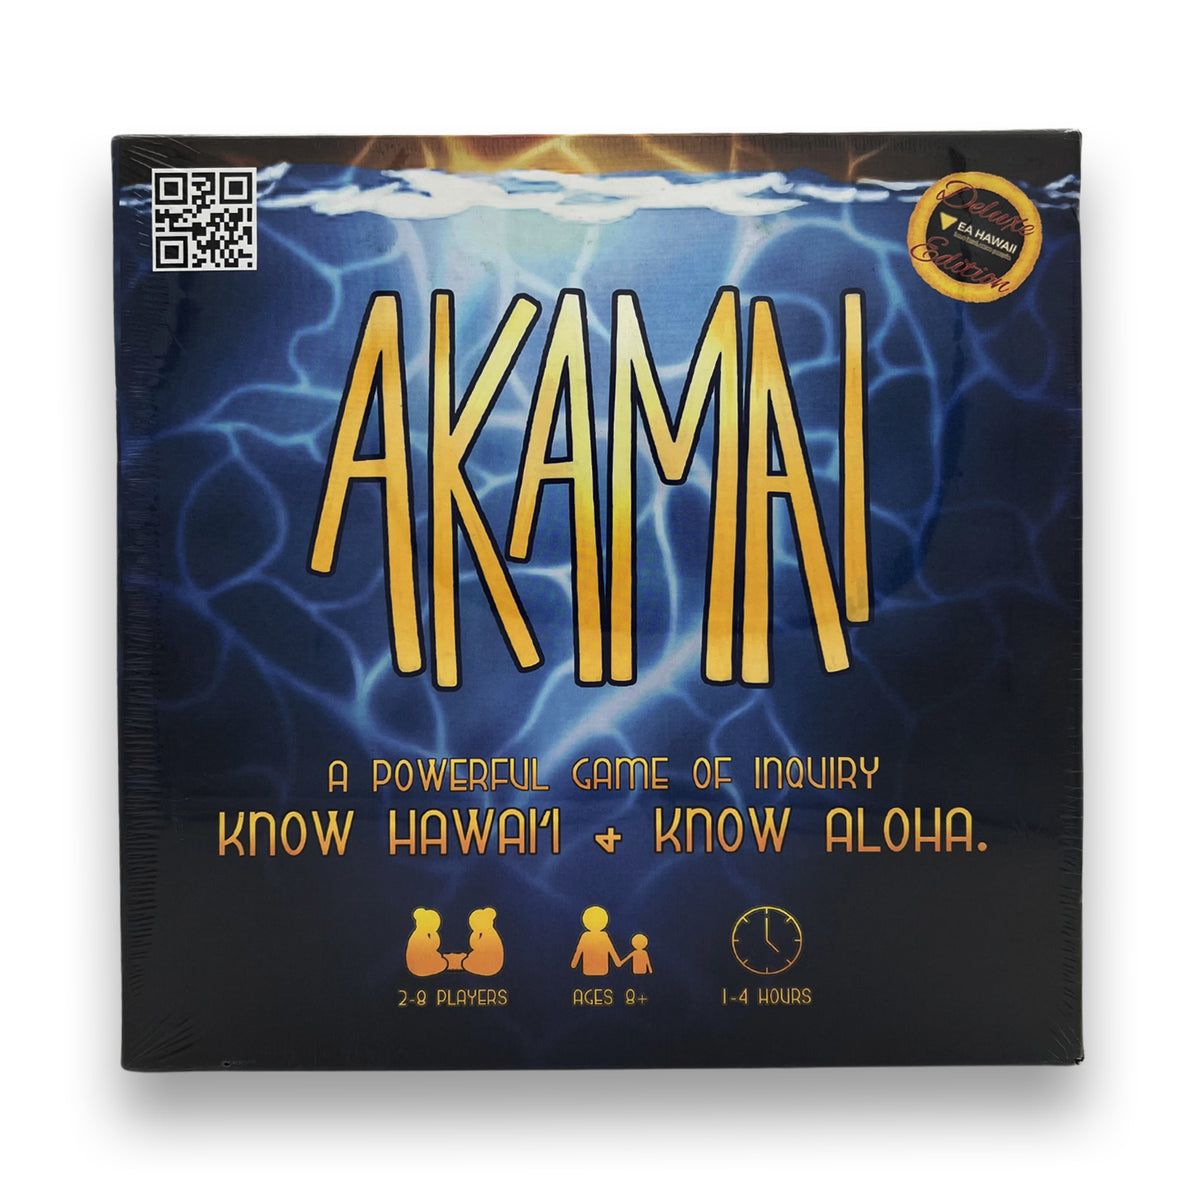 Pop-Up Mākeke - Native Books, Inc. - Akamai Trivia Game - Front View